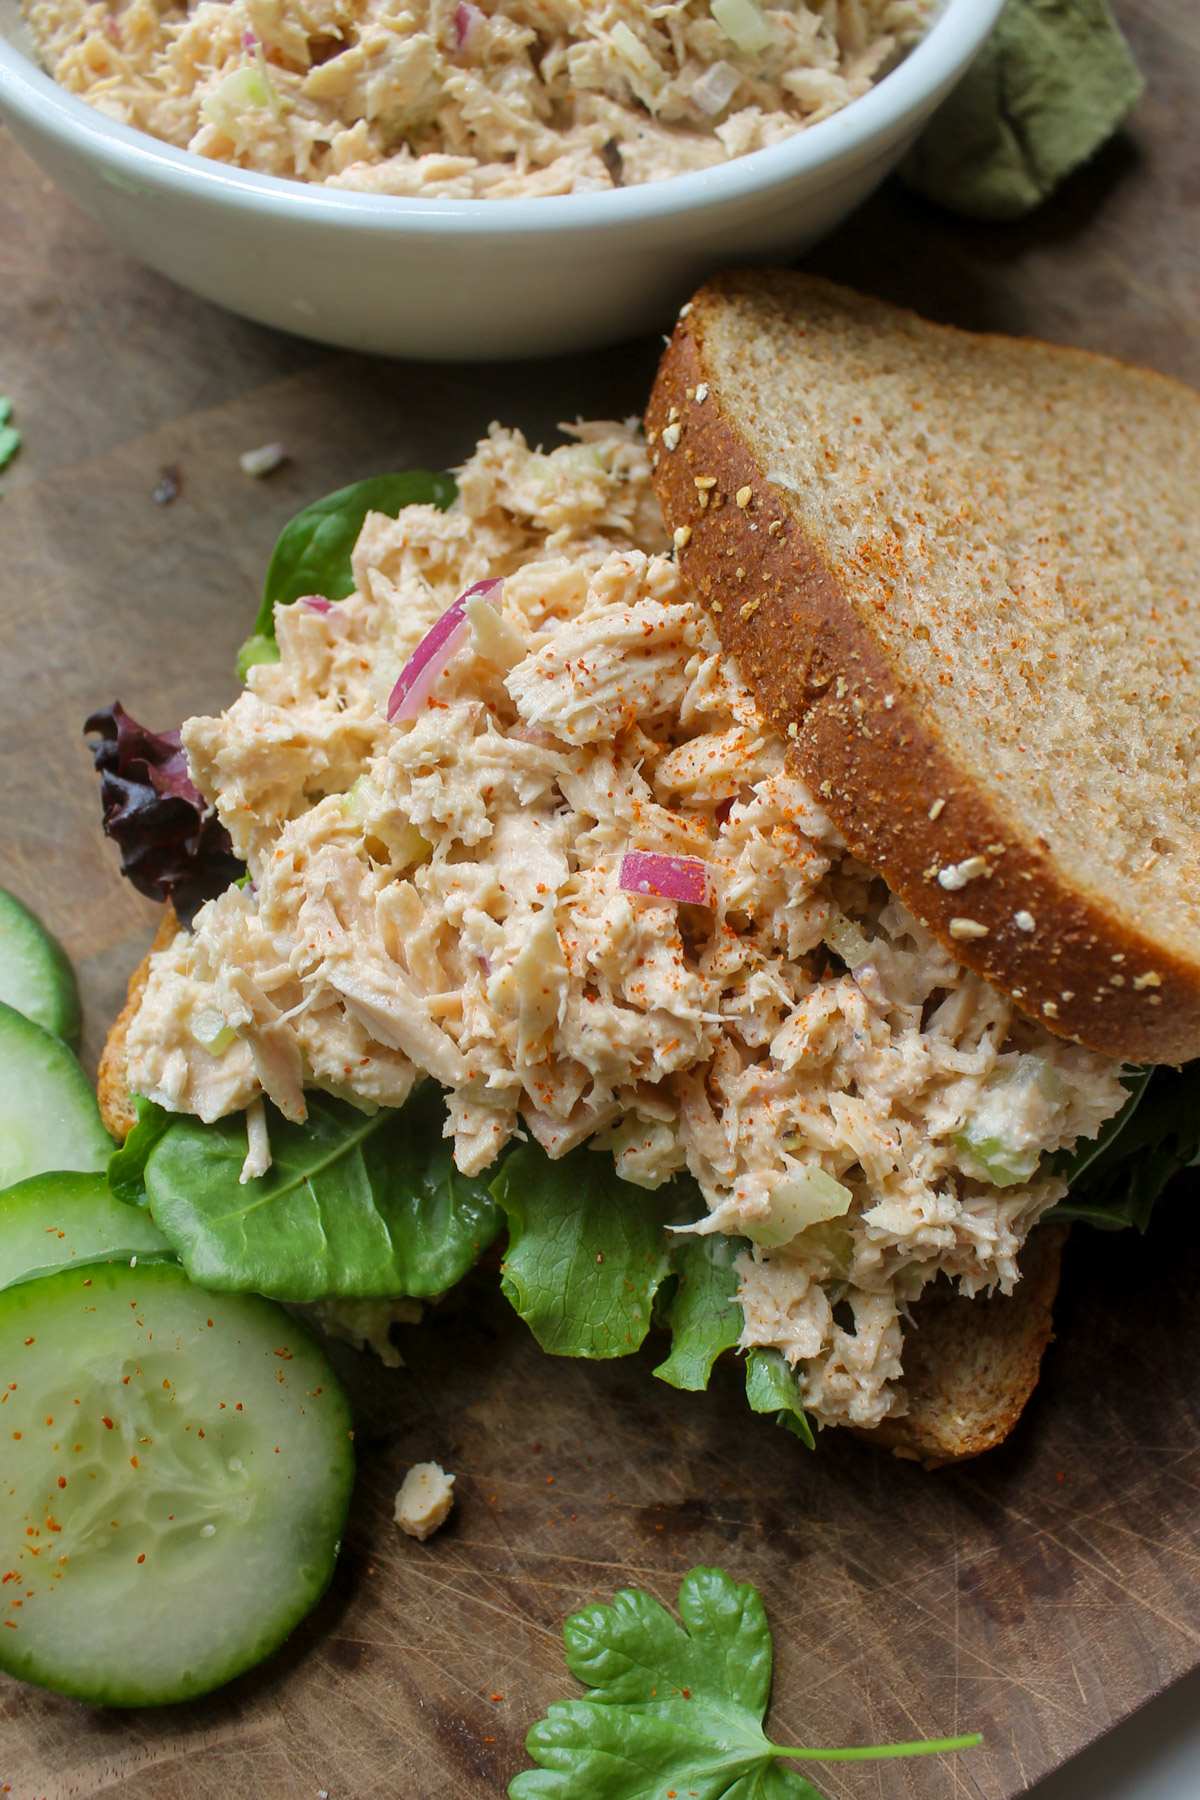 A tuna salad sandwich open faced on bread.